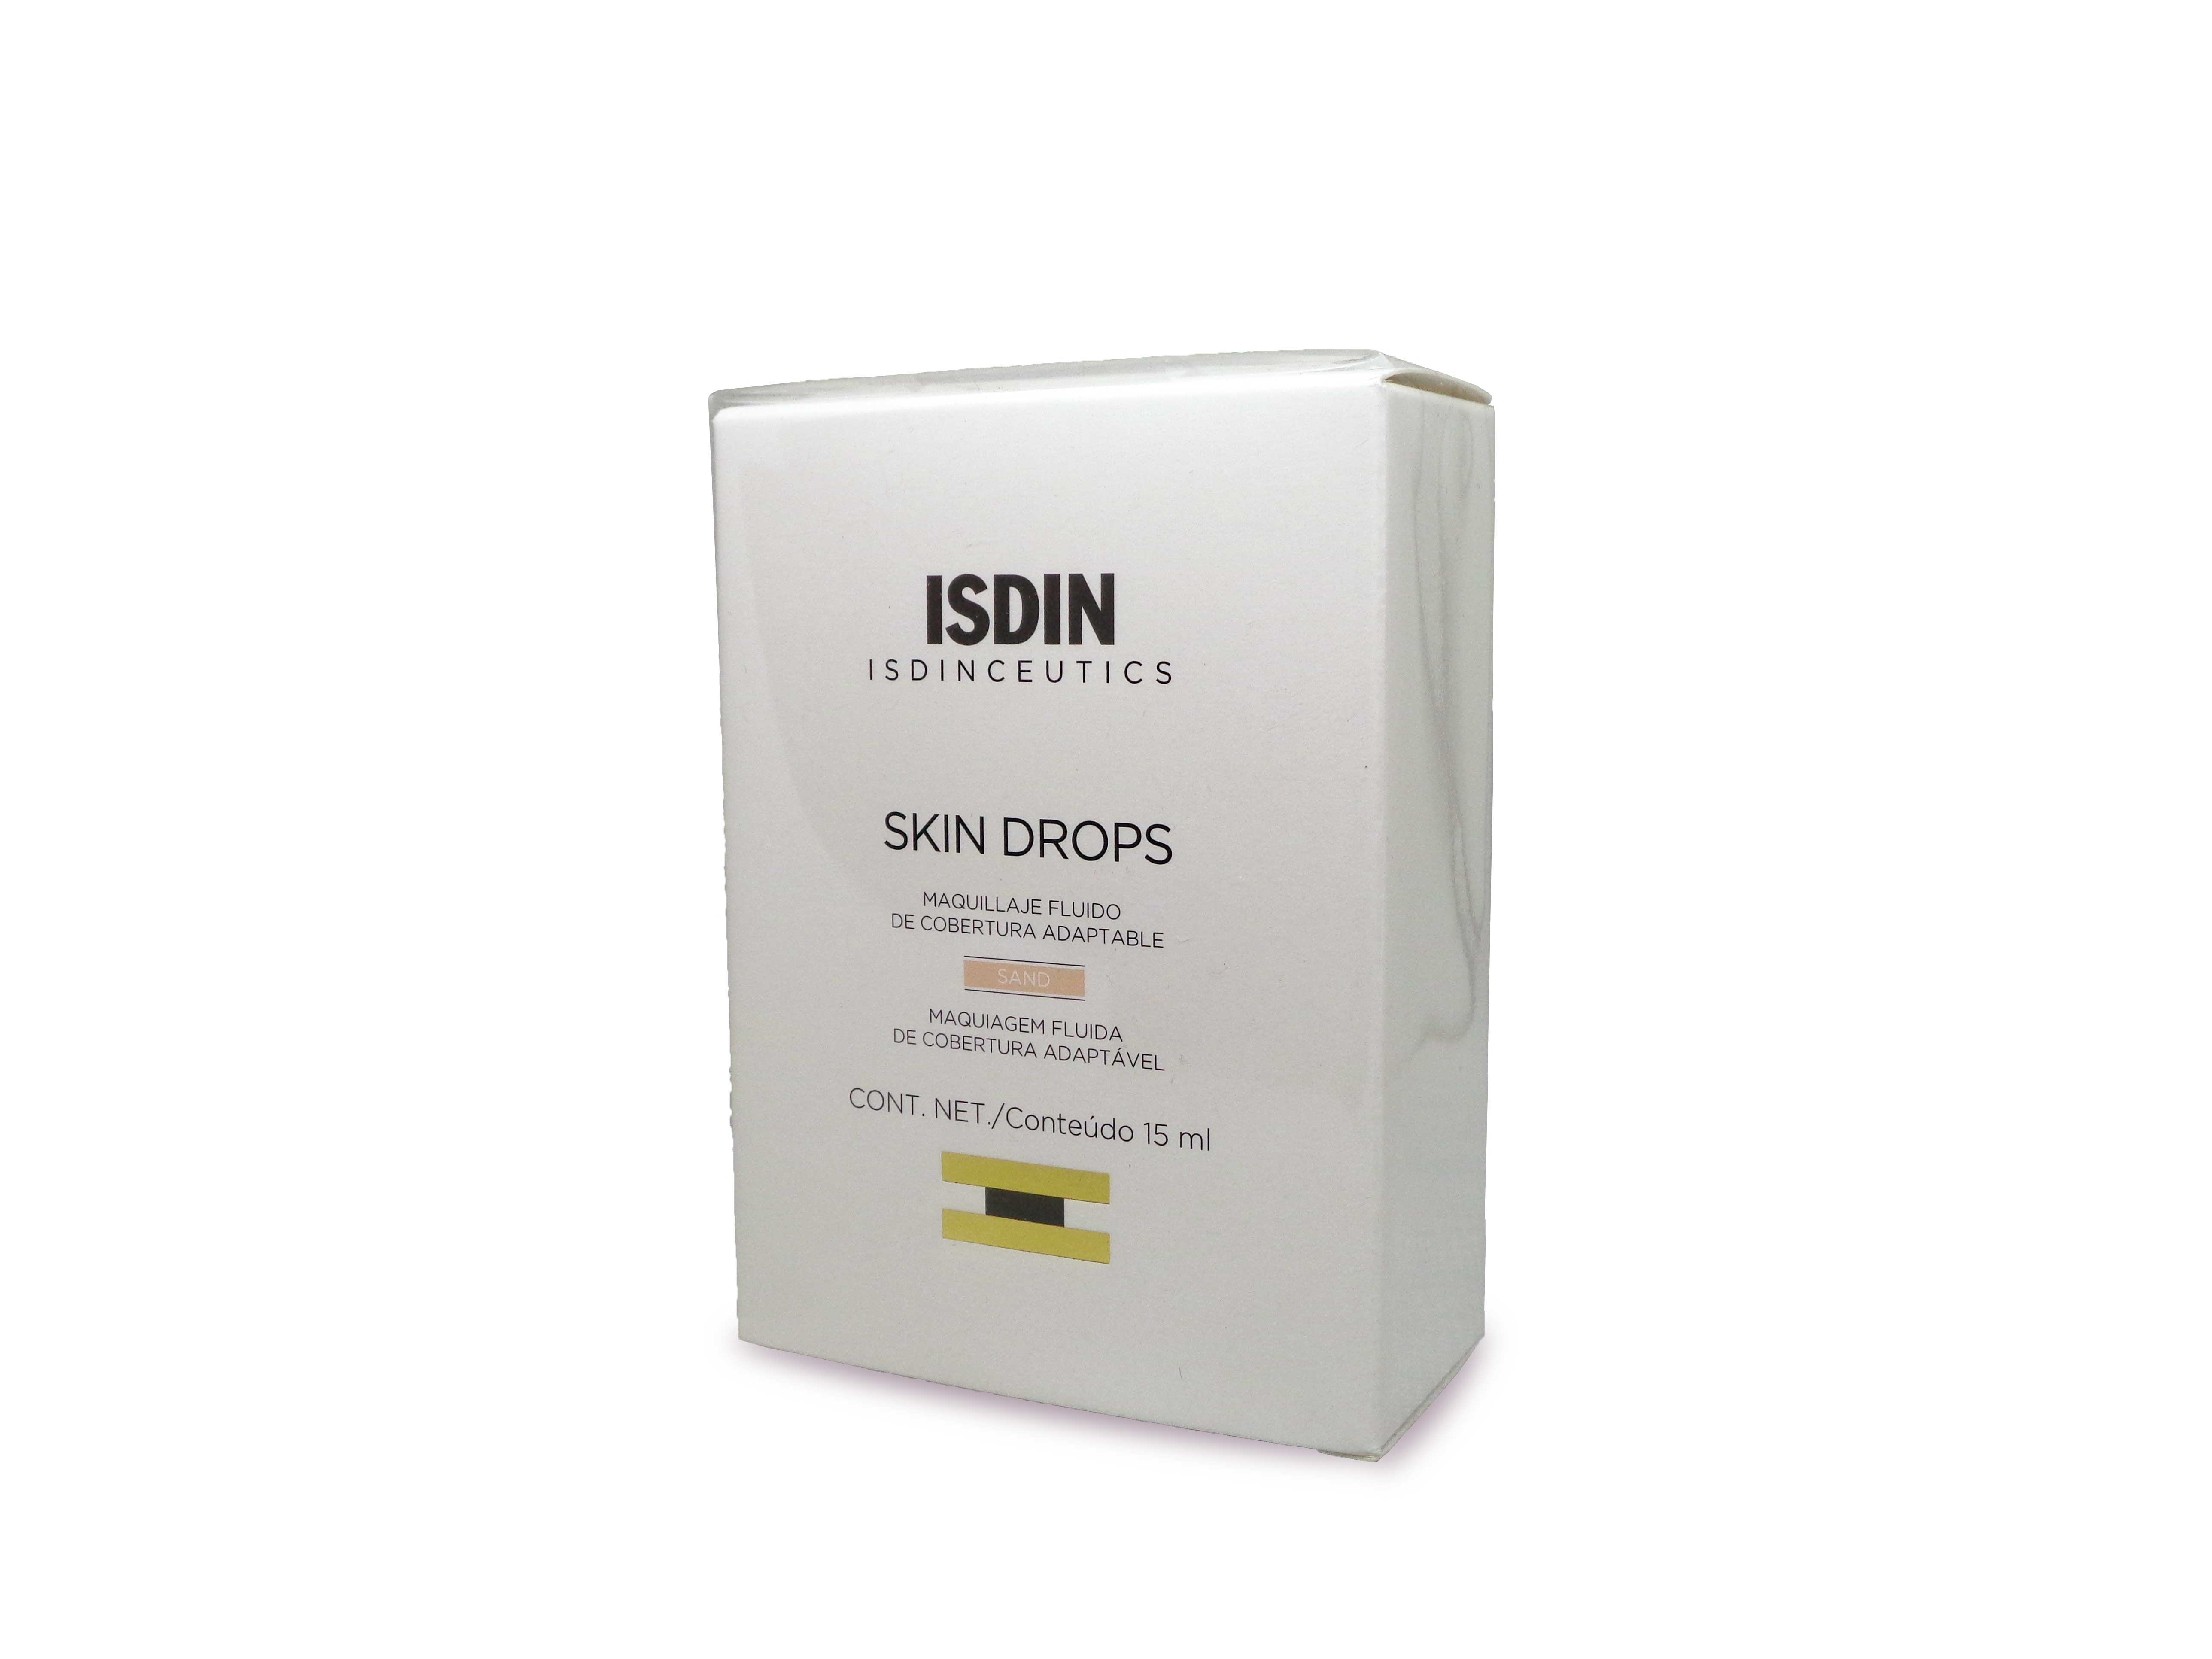 Isdinceutics Isdin Skin Drops Sand Arena Maquillaje, Productos